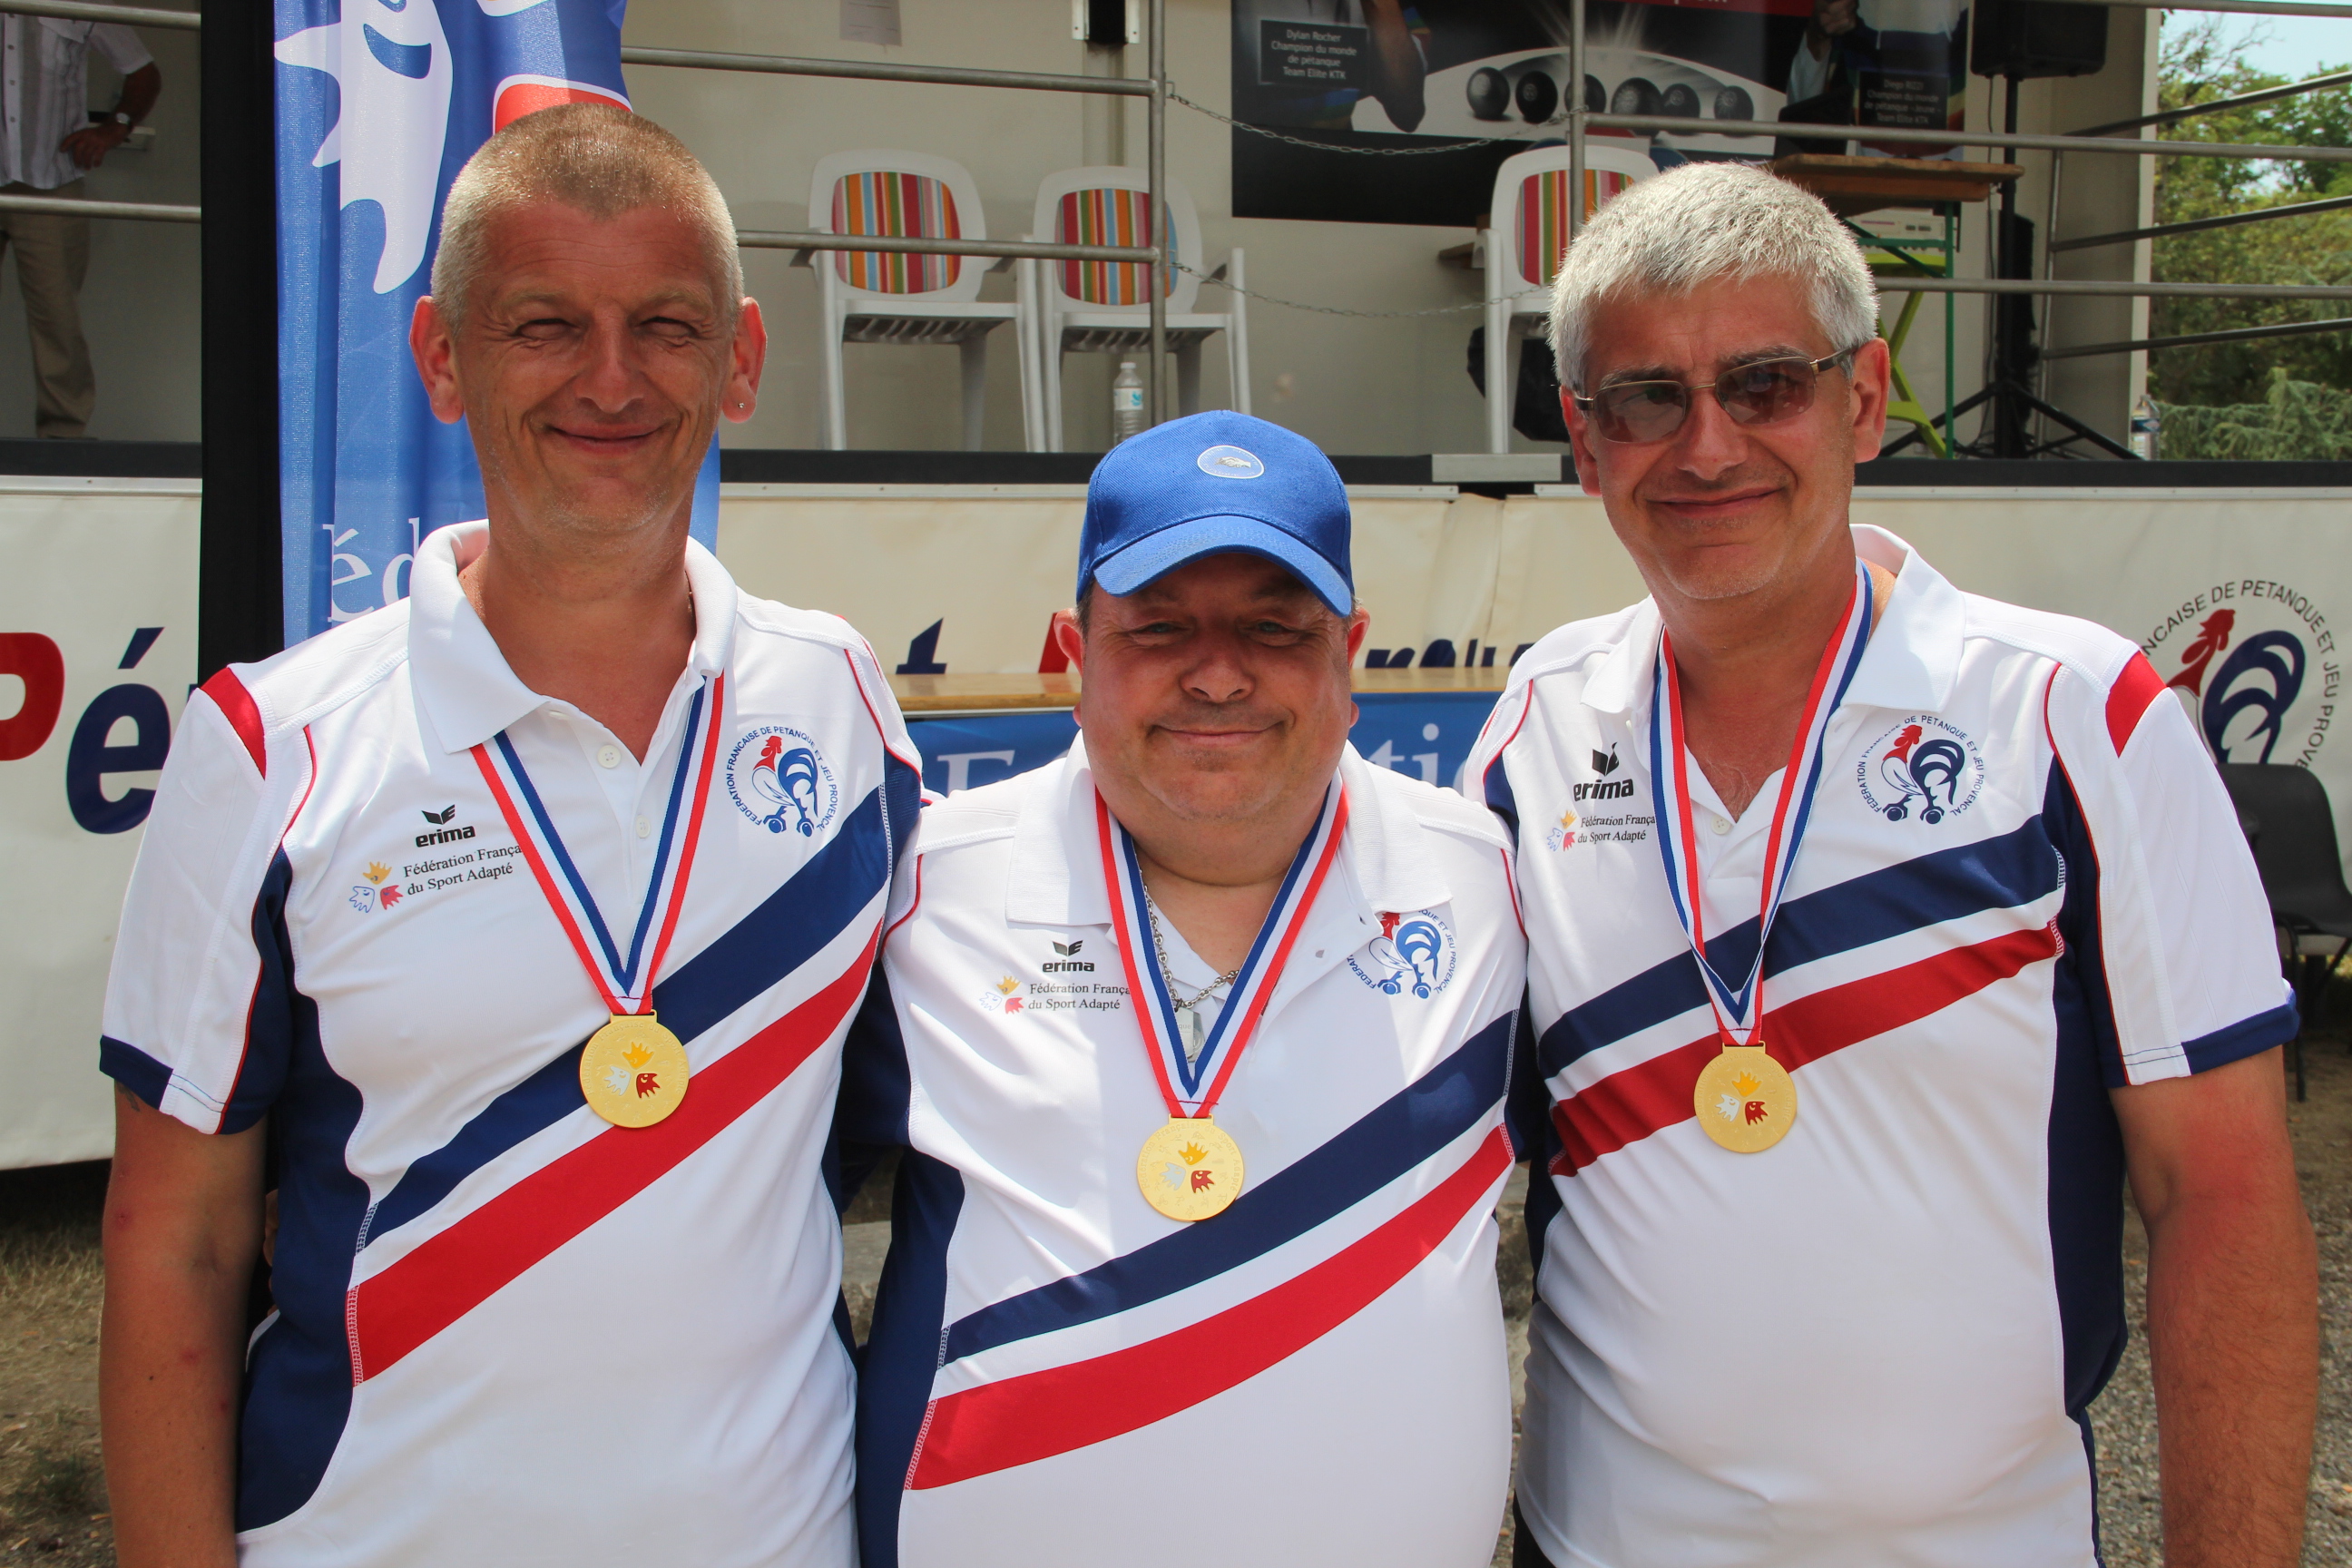 Championnat de France Sport adapté 2015 - Montauban